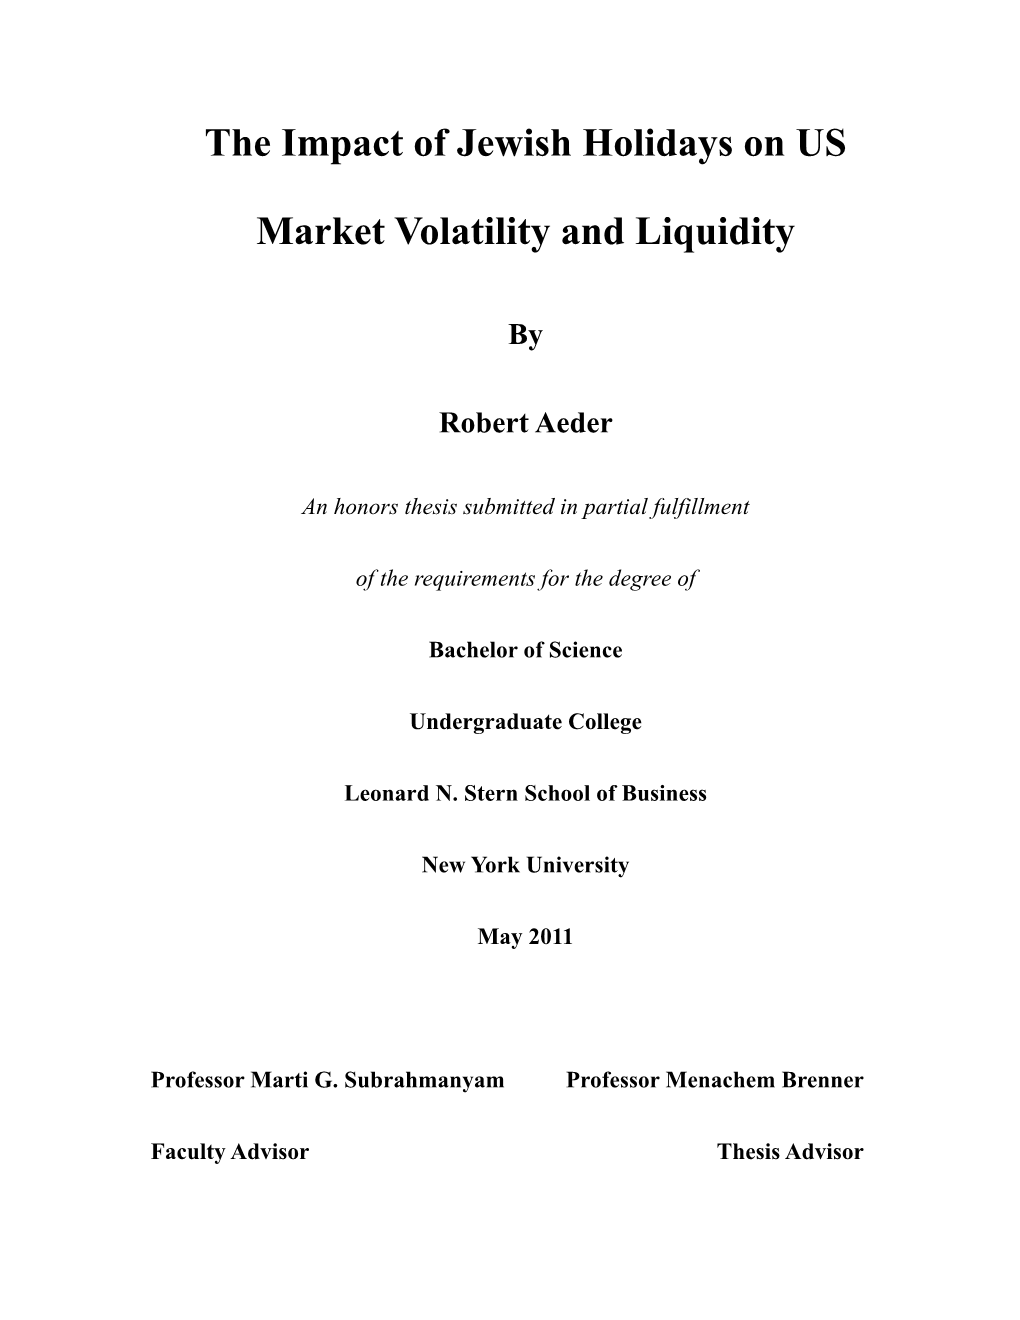 The Impact of Jewish Holidays on US Market Volatility and Liquidity